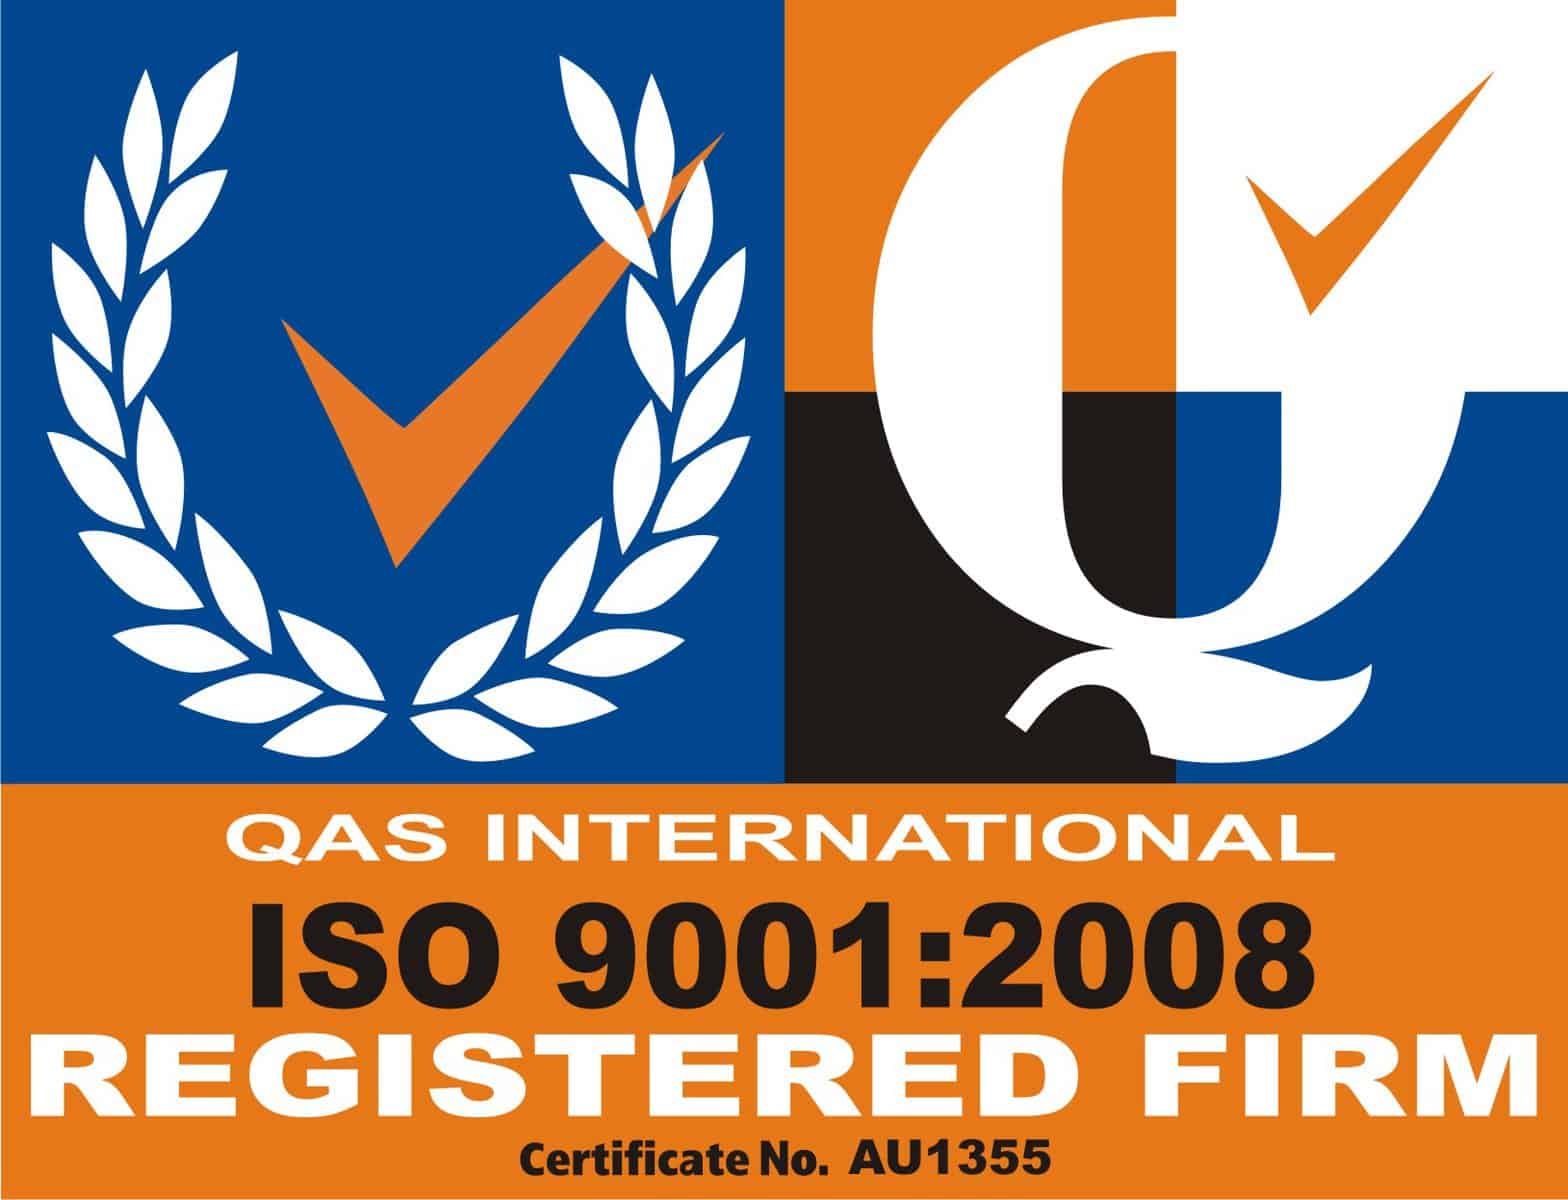 QAS International ISO 9001:2008 Registered Firm Certificate No. AU1355